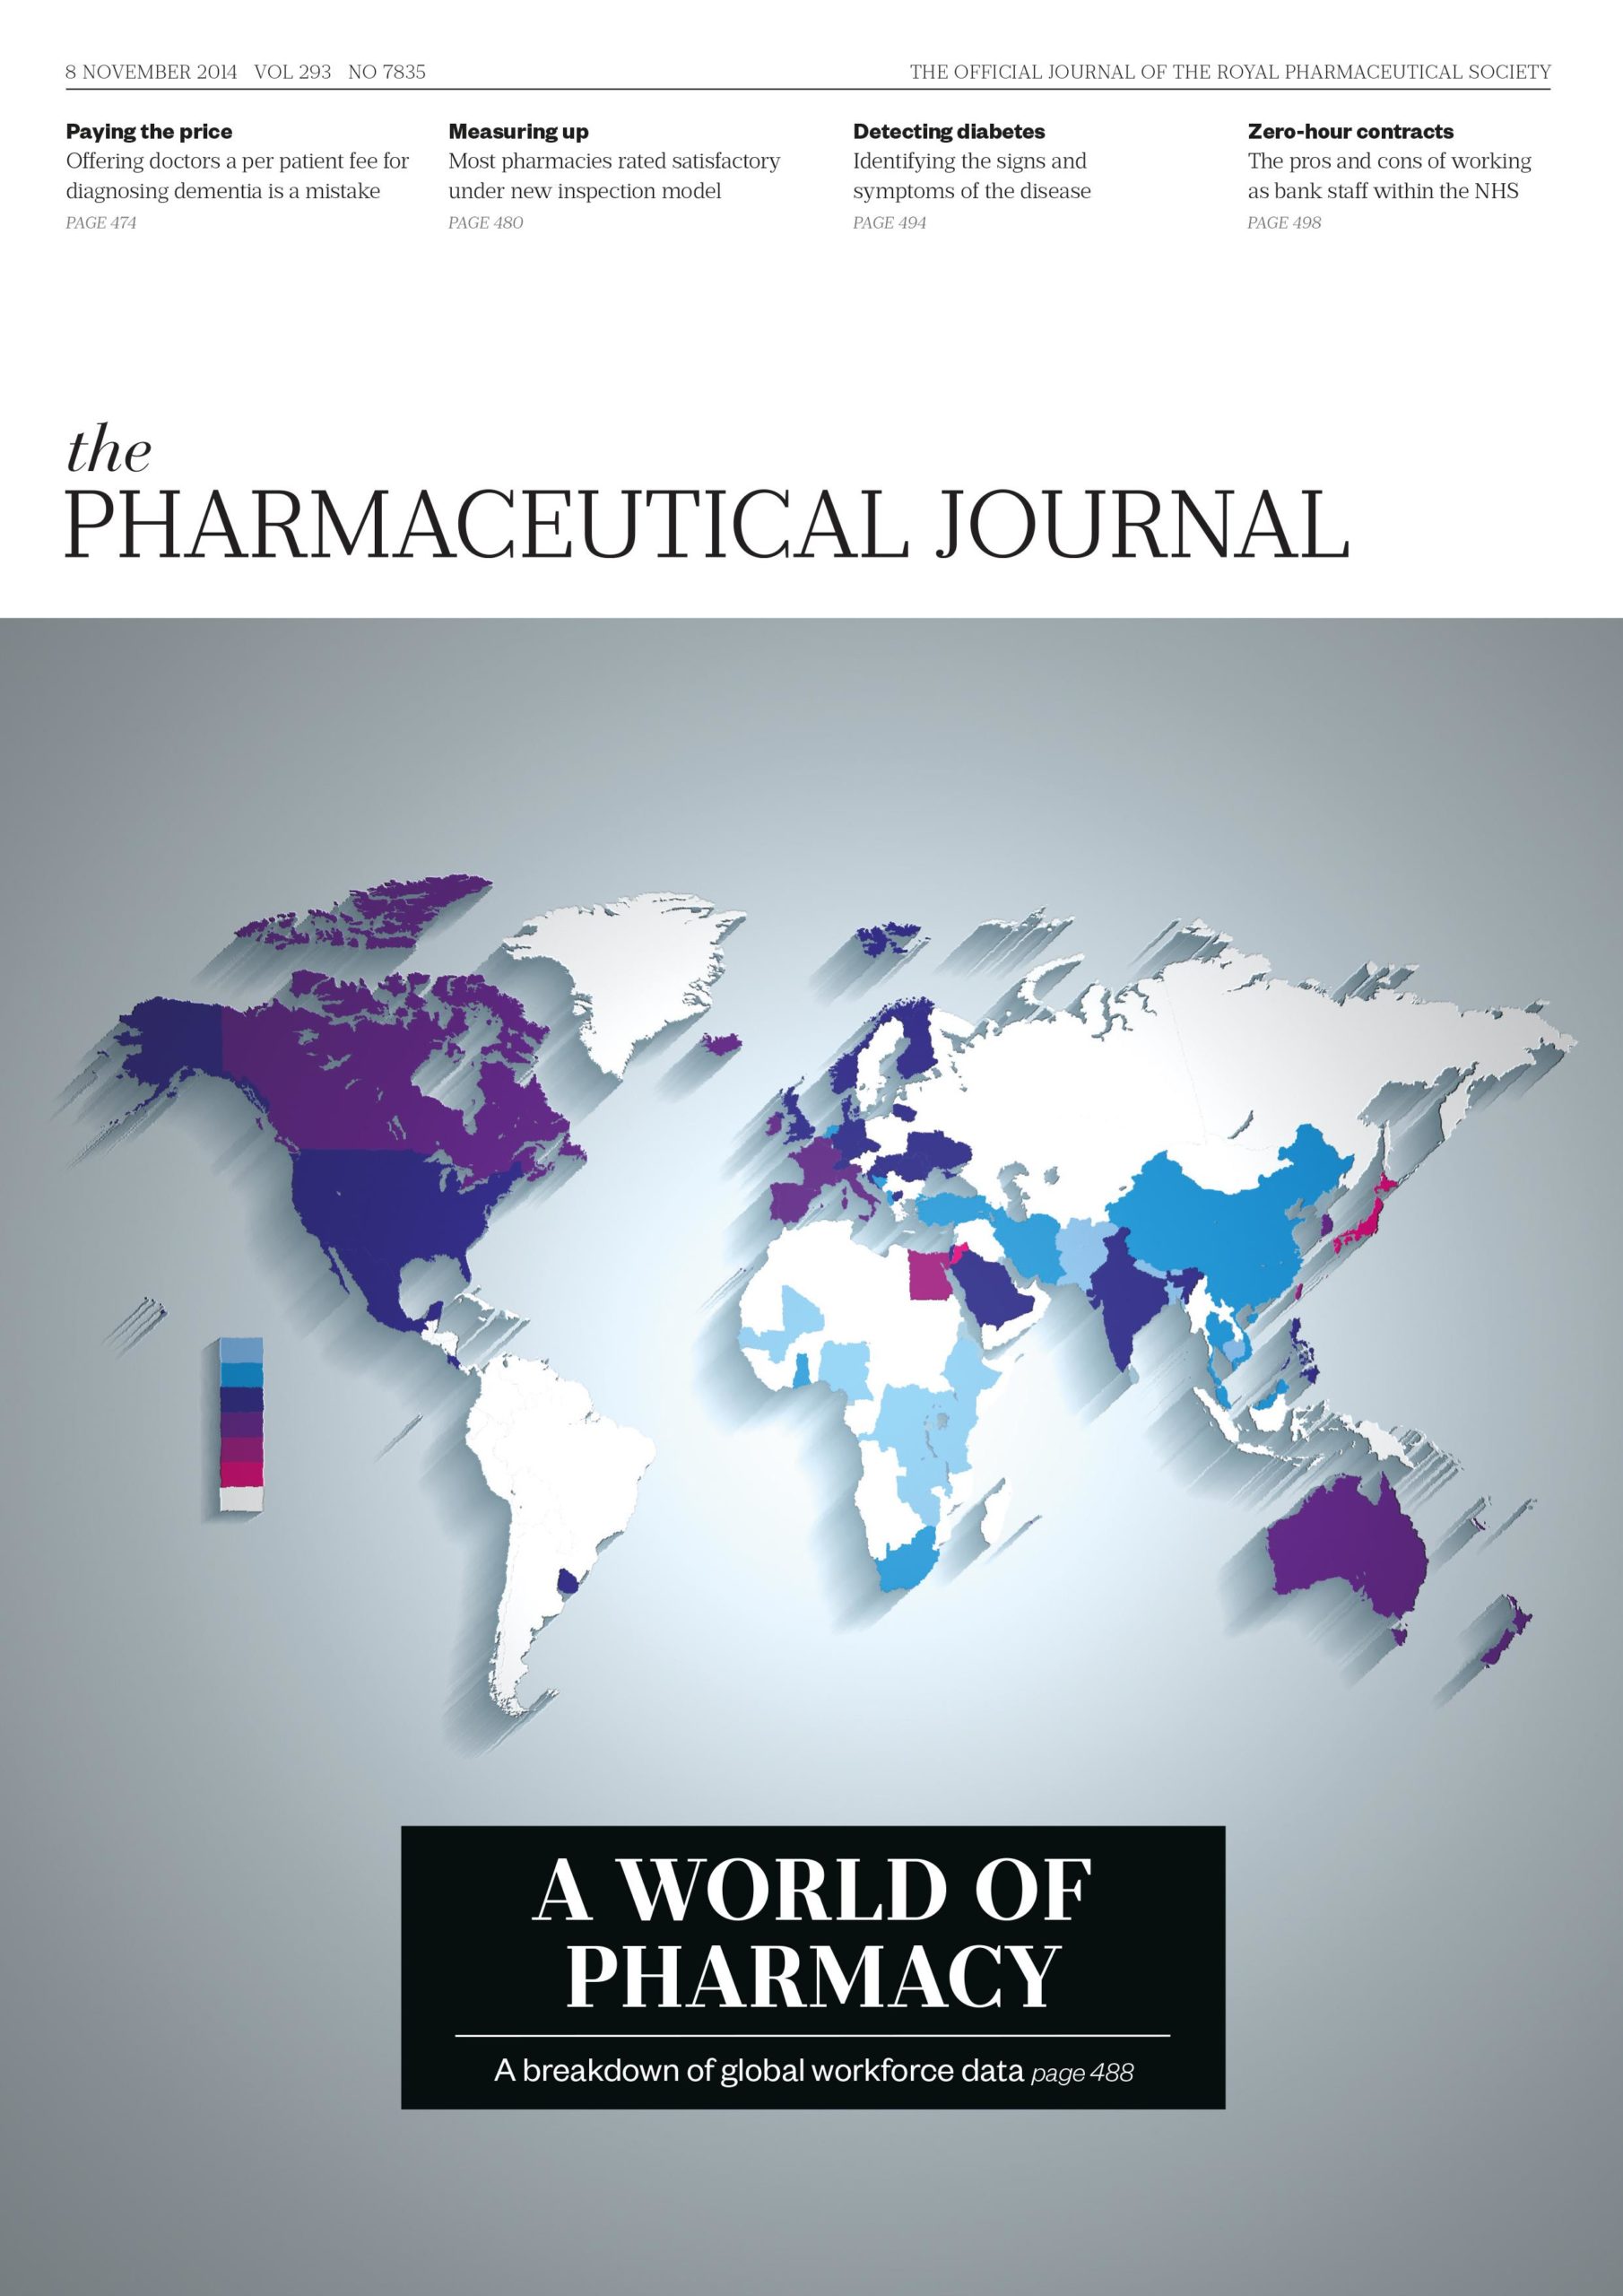 Publication issue cover for PJ, 8 November 2014, Vol 293, No 7835